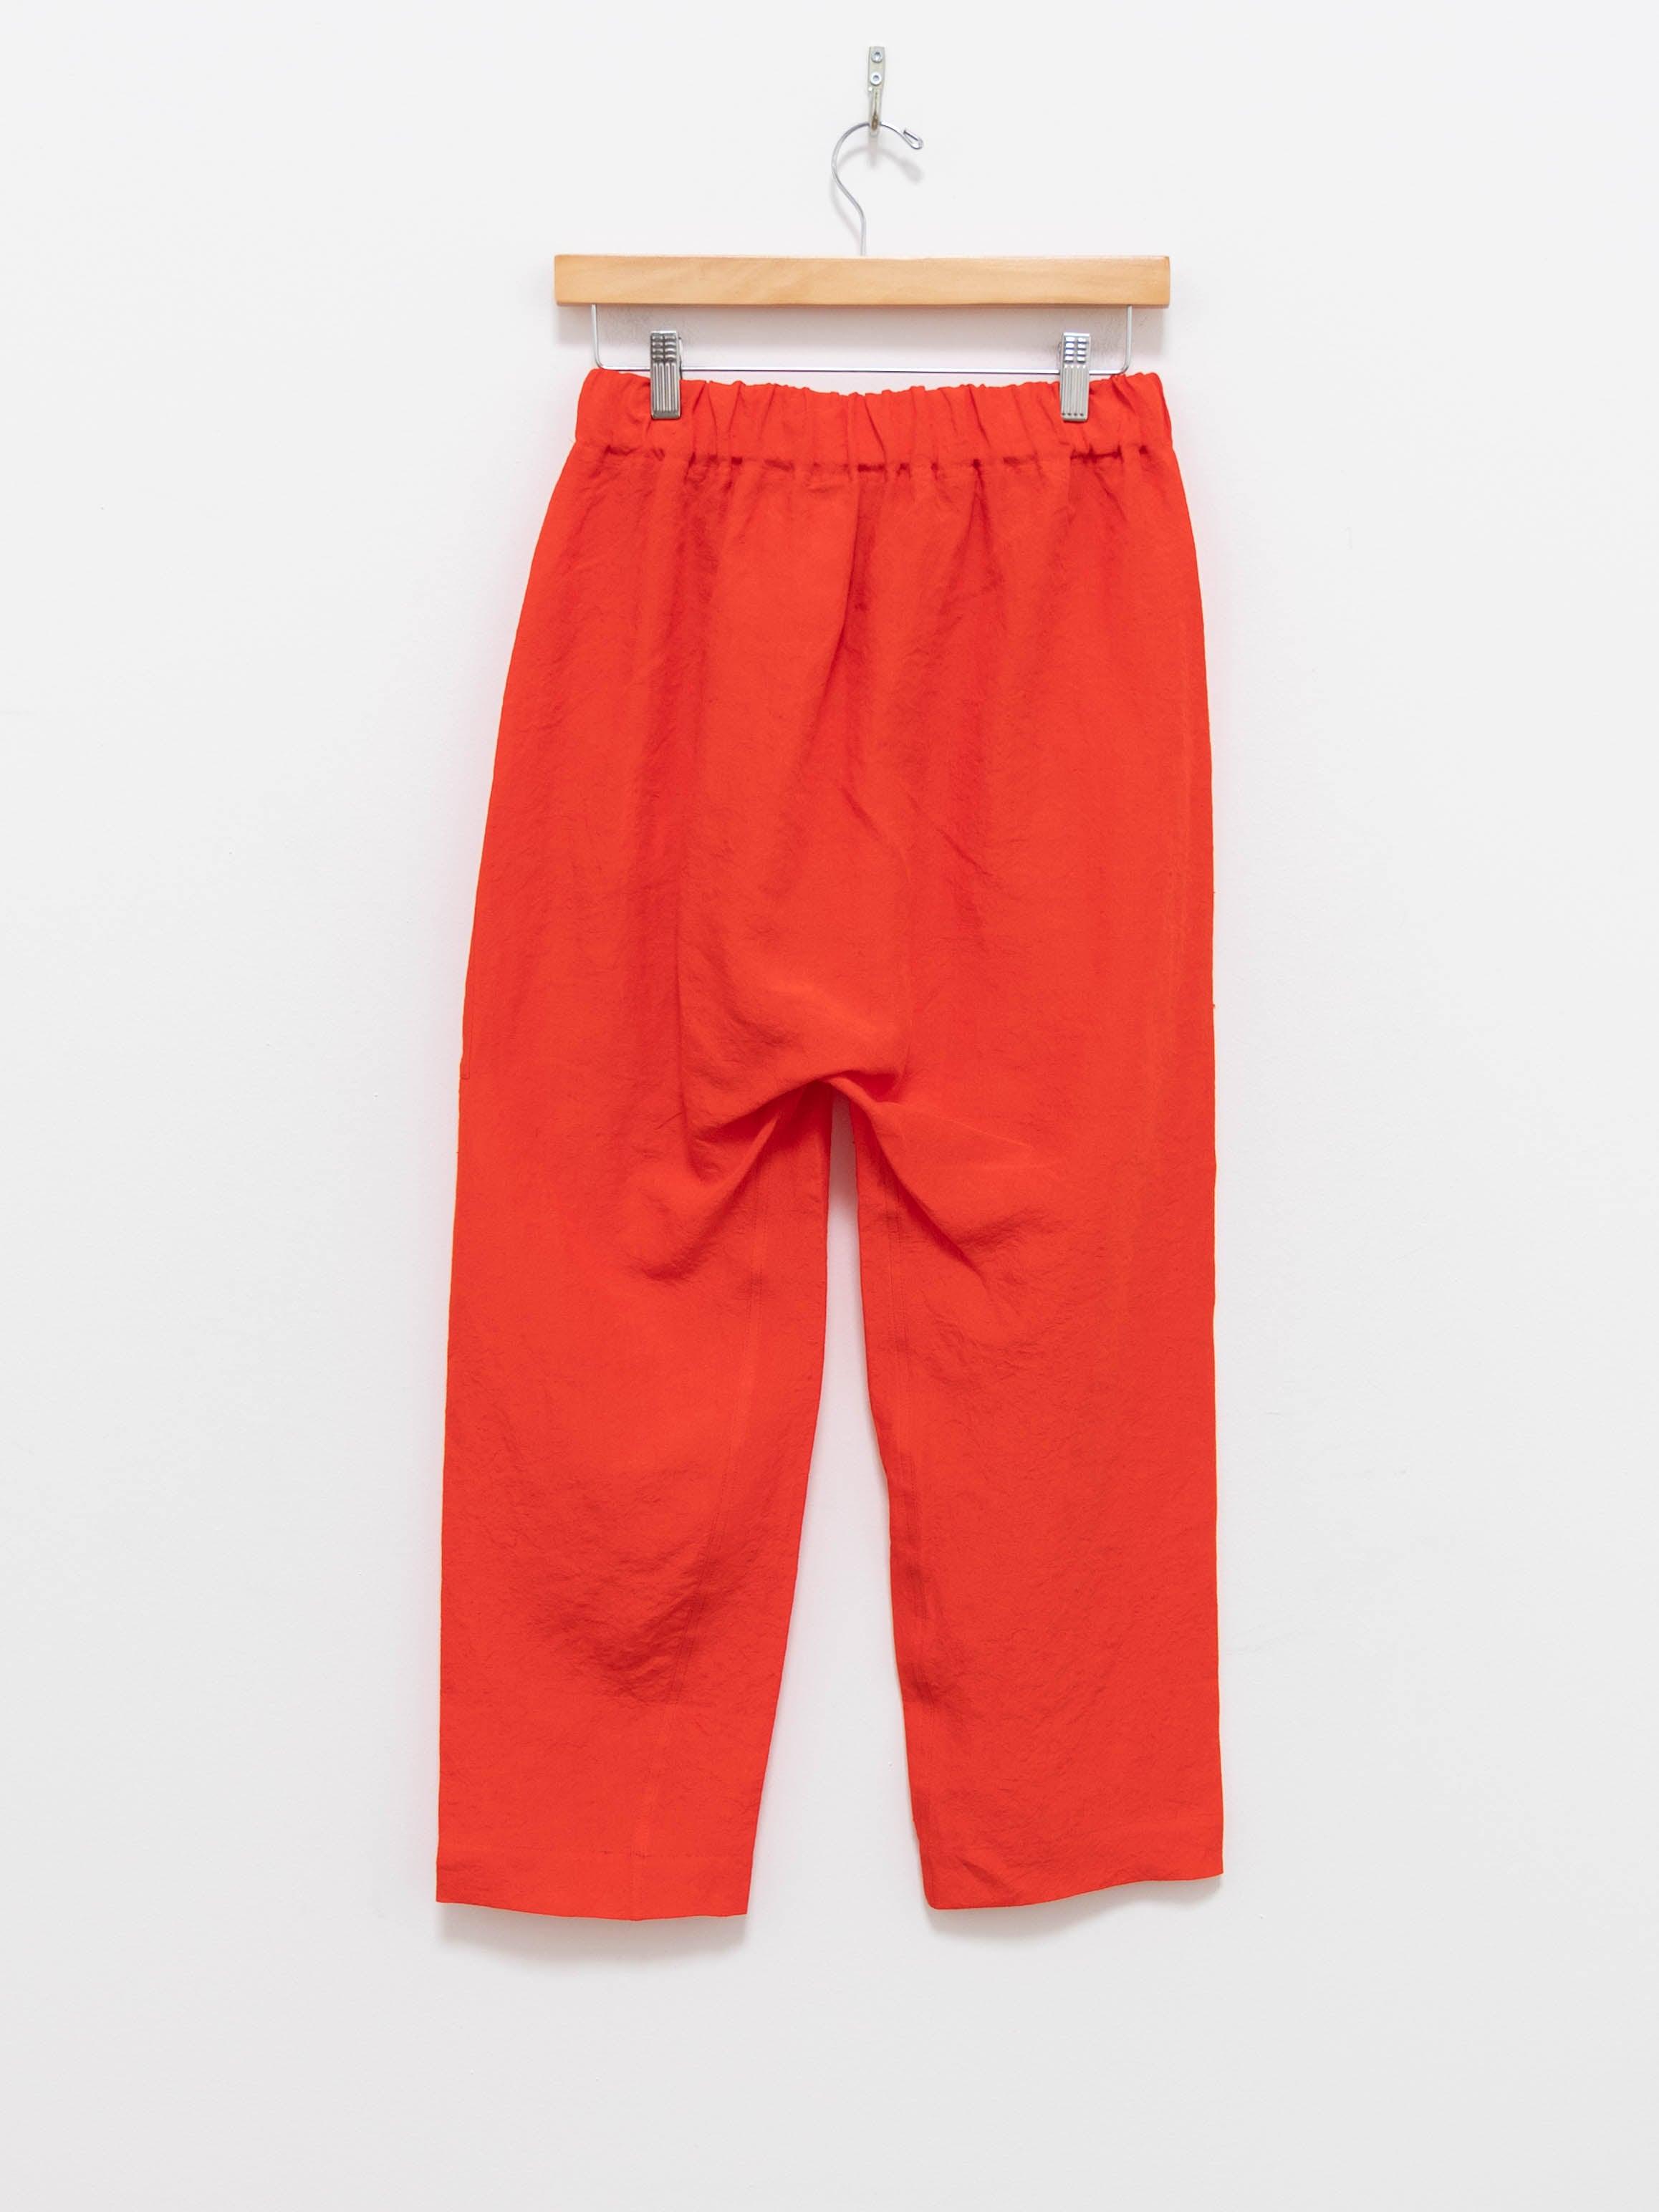 Namu Shop - Sofie D'Hoore Punch Linen Trousers - Red Pepper